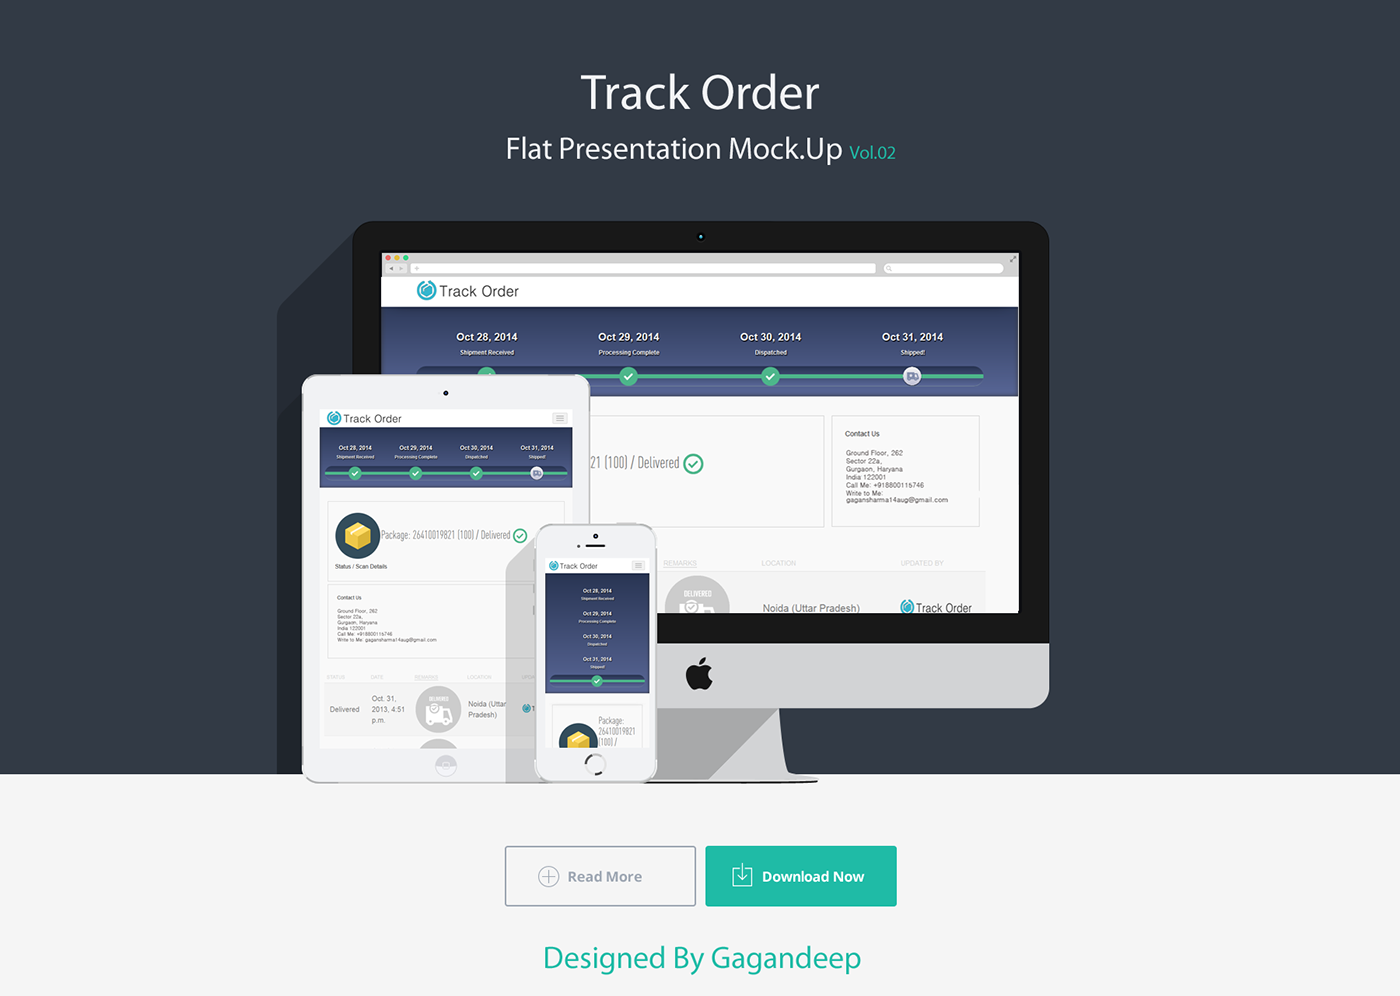 Order tracking. Презентация Flat. Responsive UI Design. Track order кнопка.